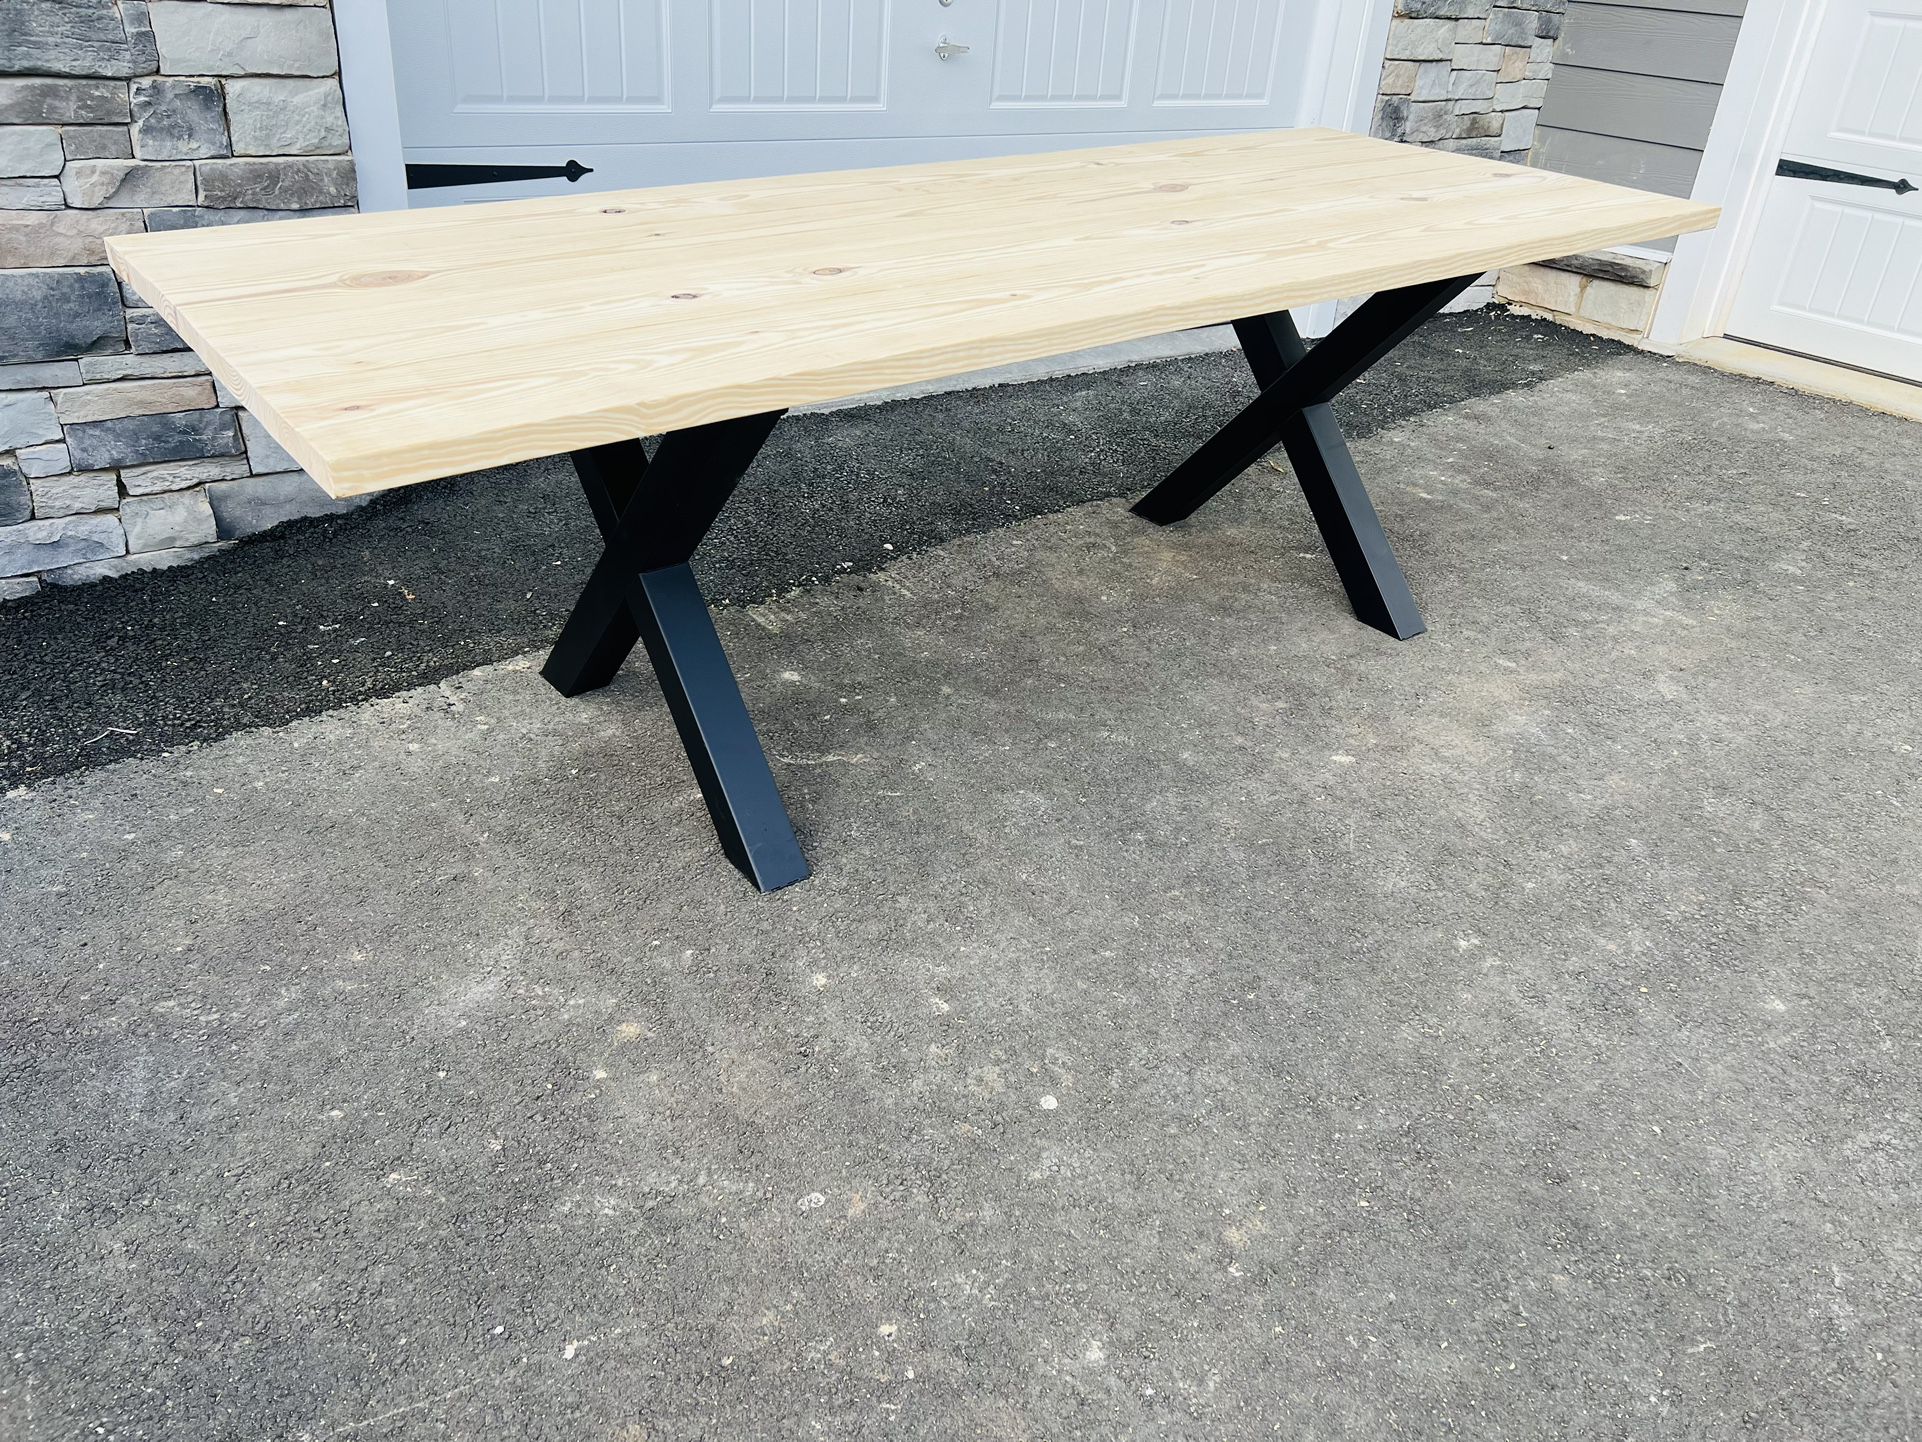 Outdoor/Indoor Dining Table